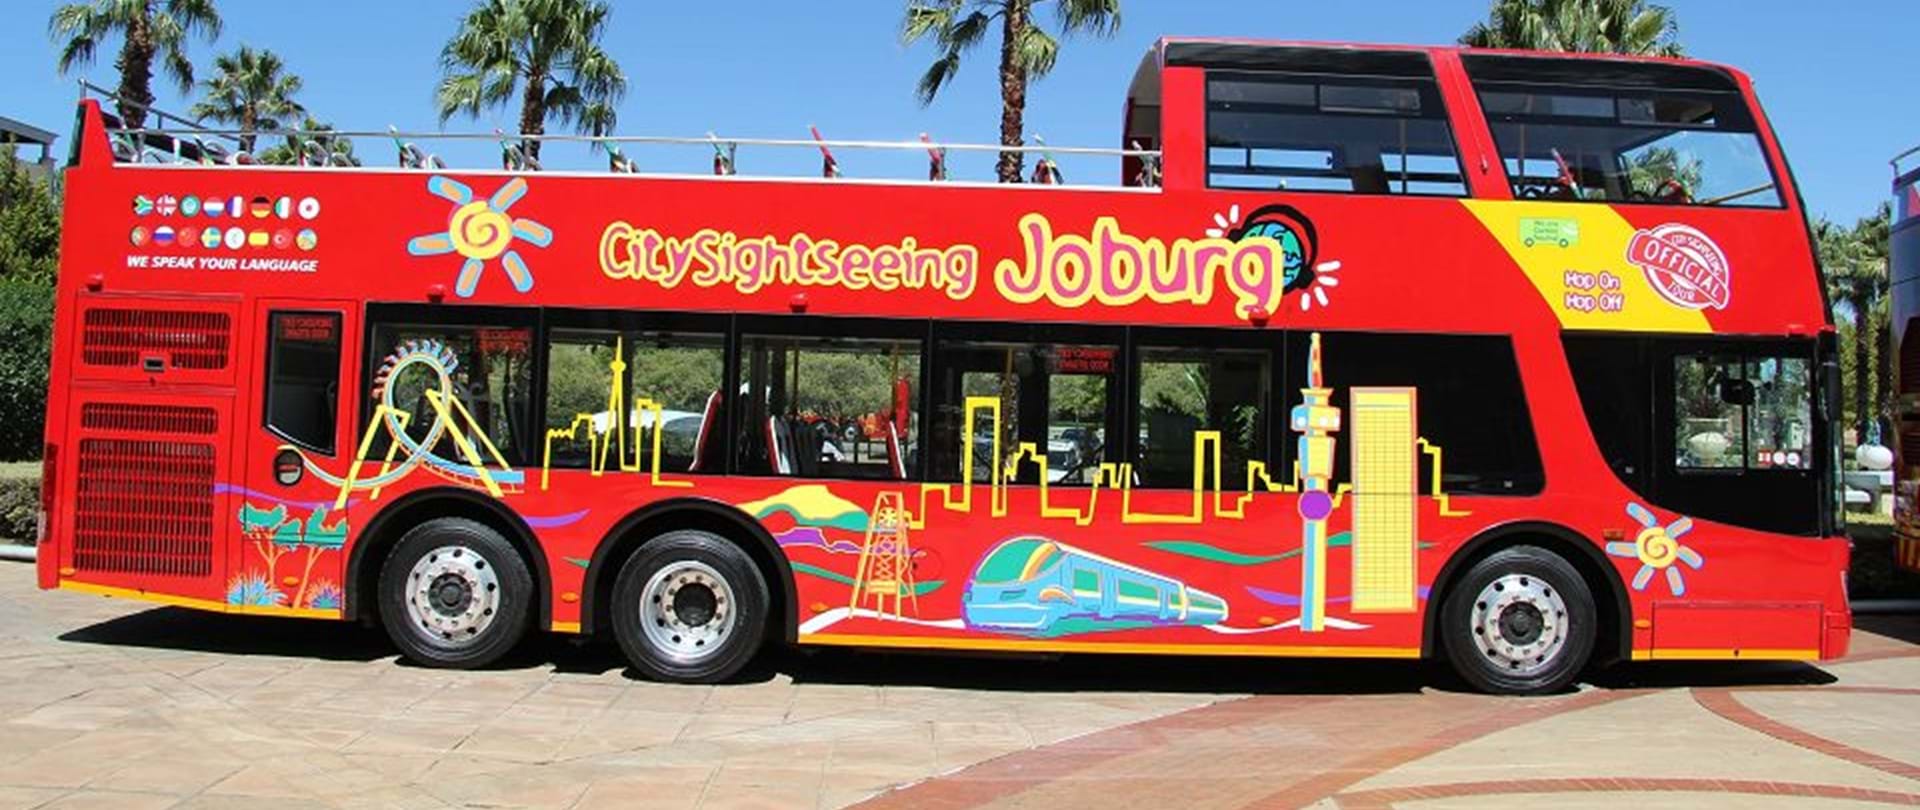 johannesburg tour bus